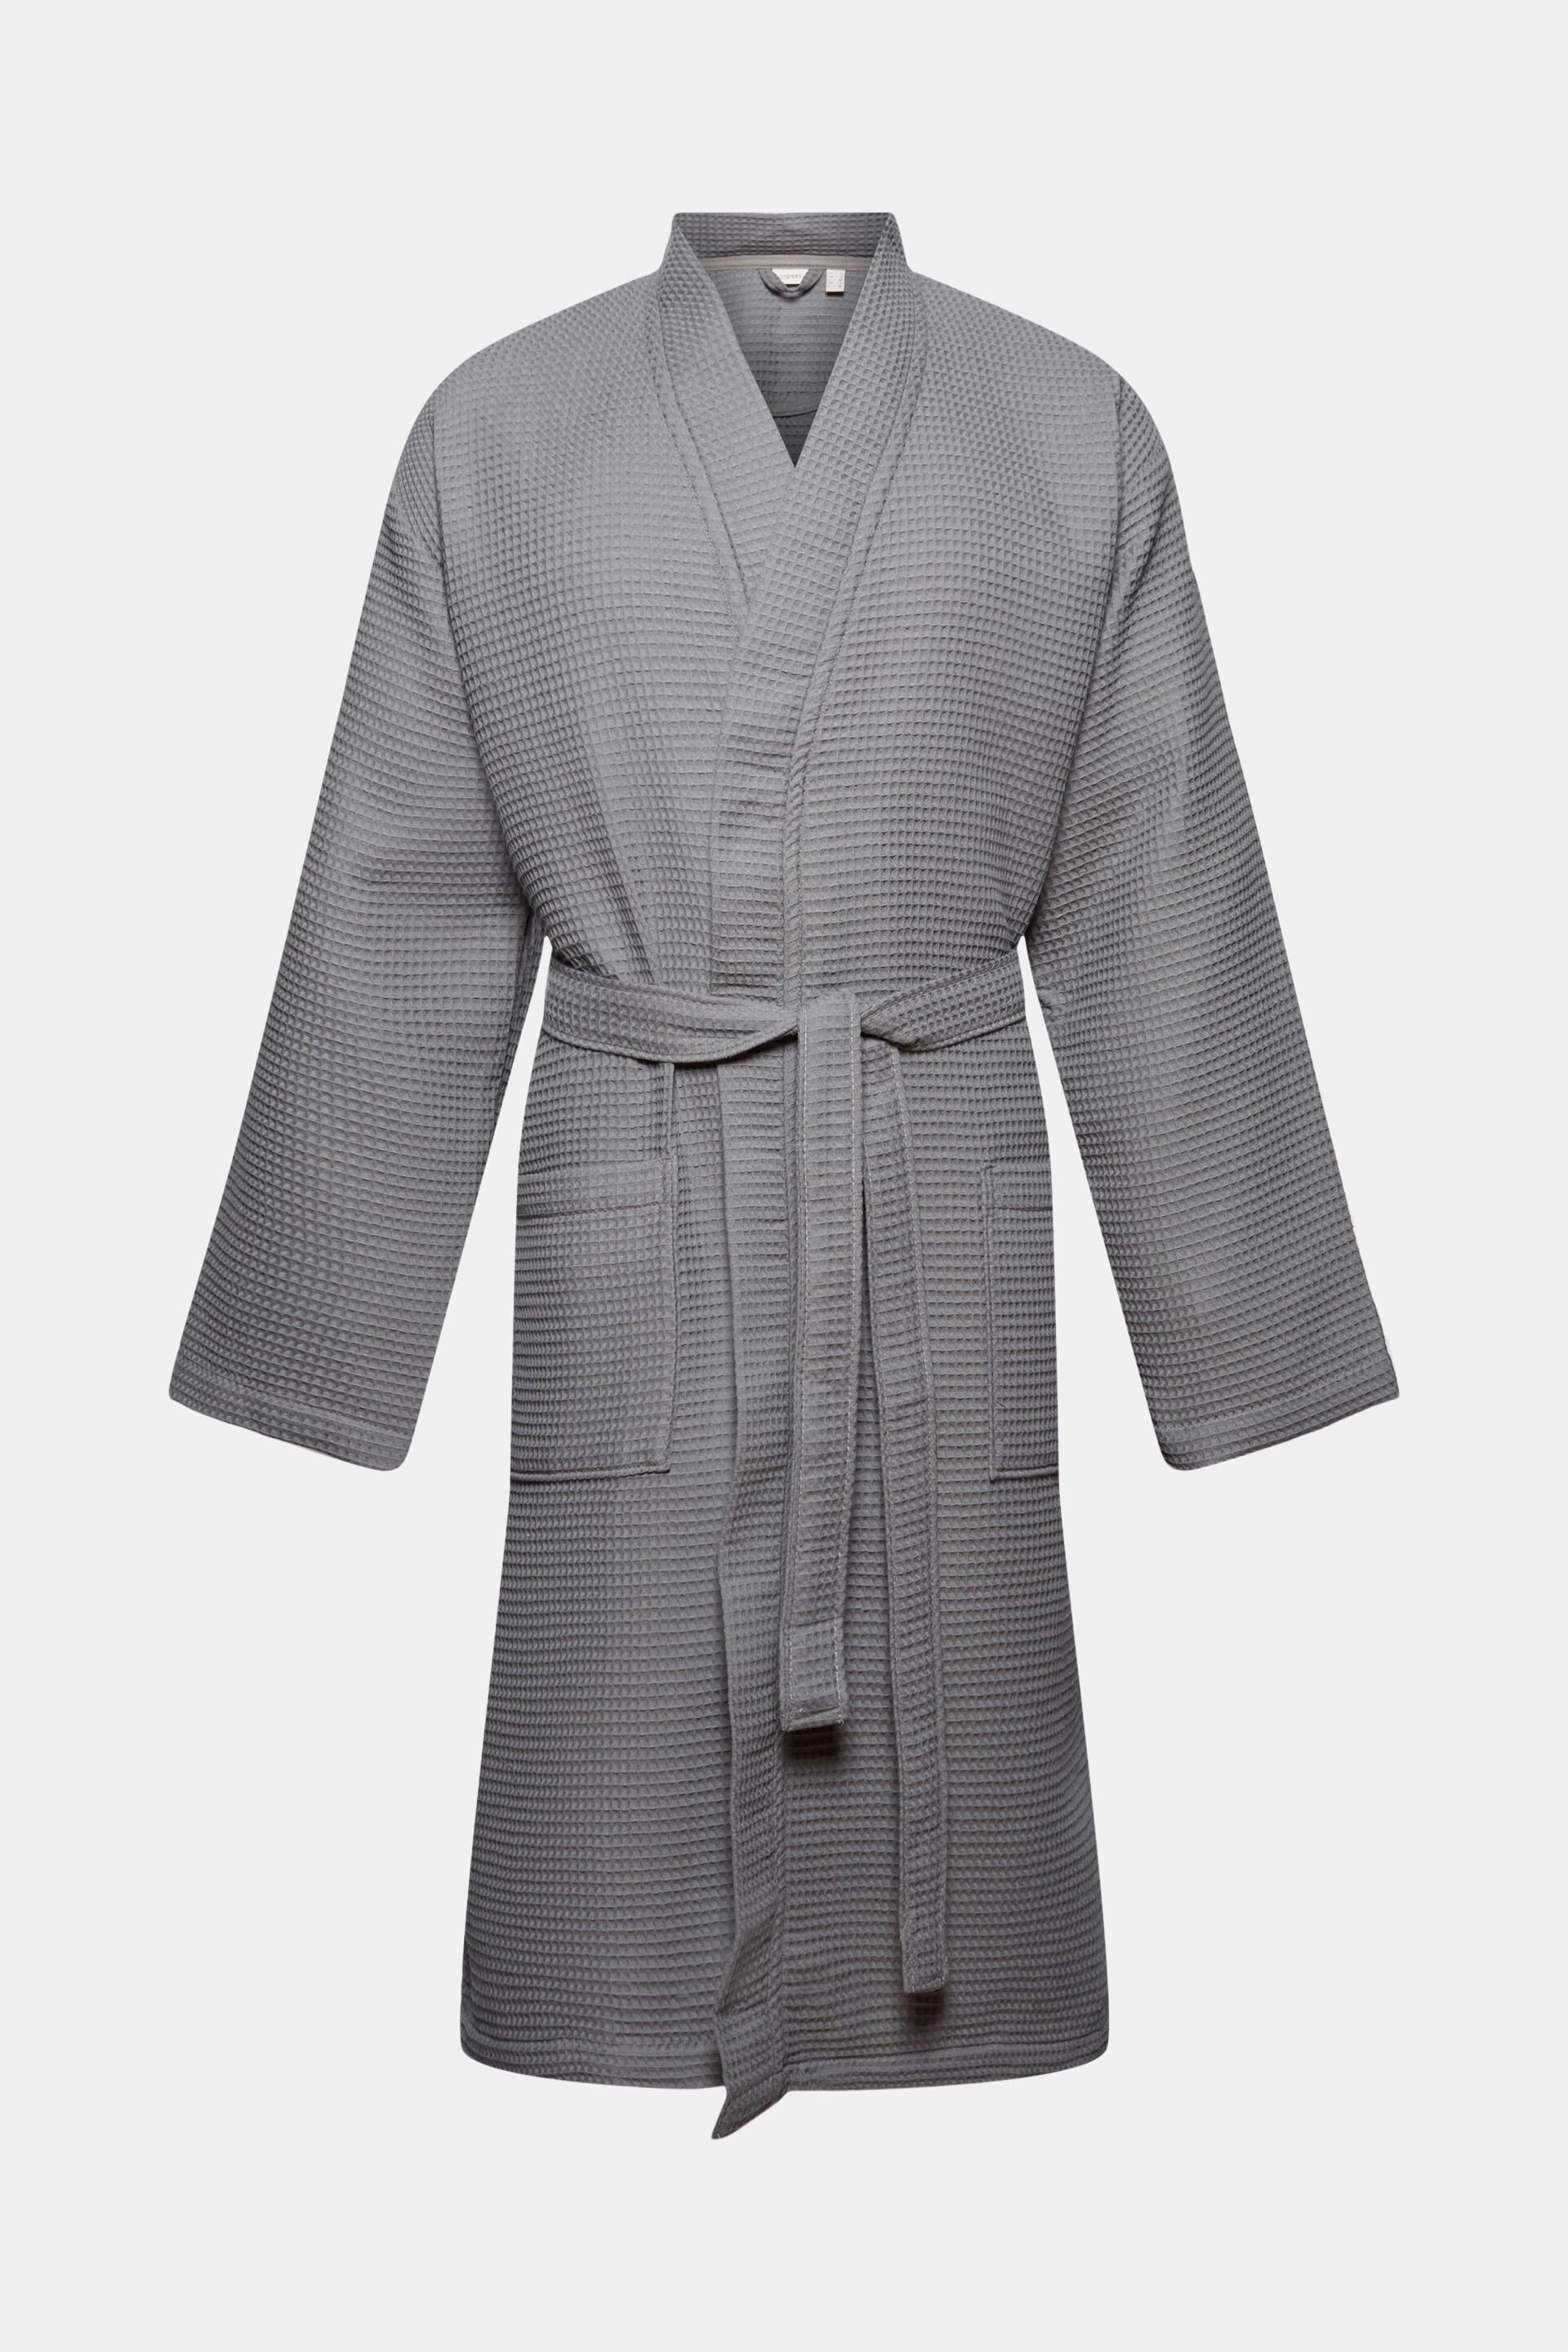 Kleding Herenkleding Pyjamas & Badjassen Sets 16625 French unworn men's 100% navy blue cotton pyjamas size Small HW 